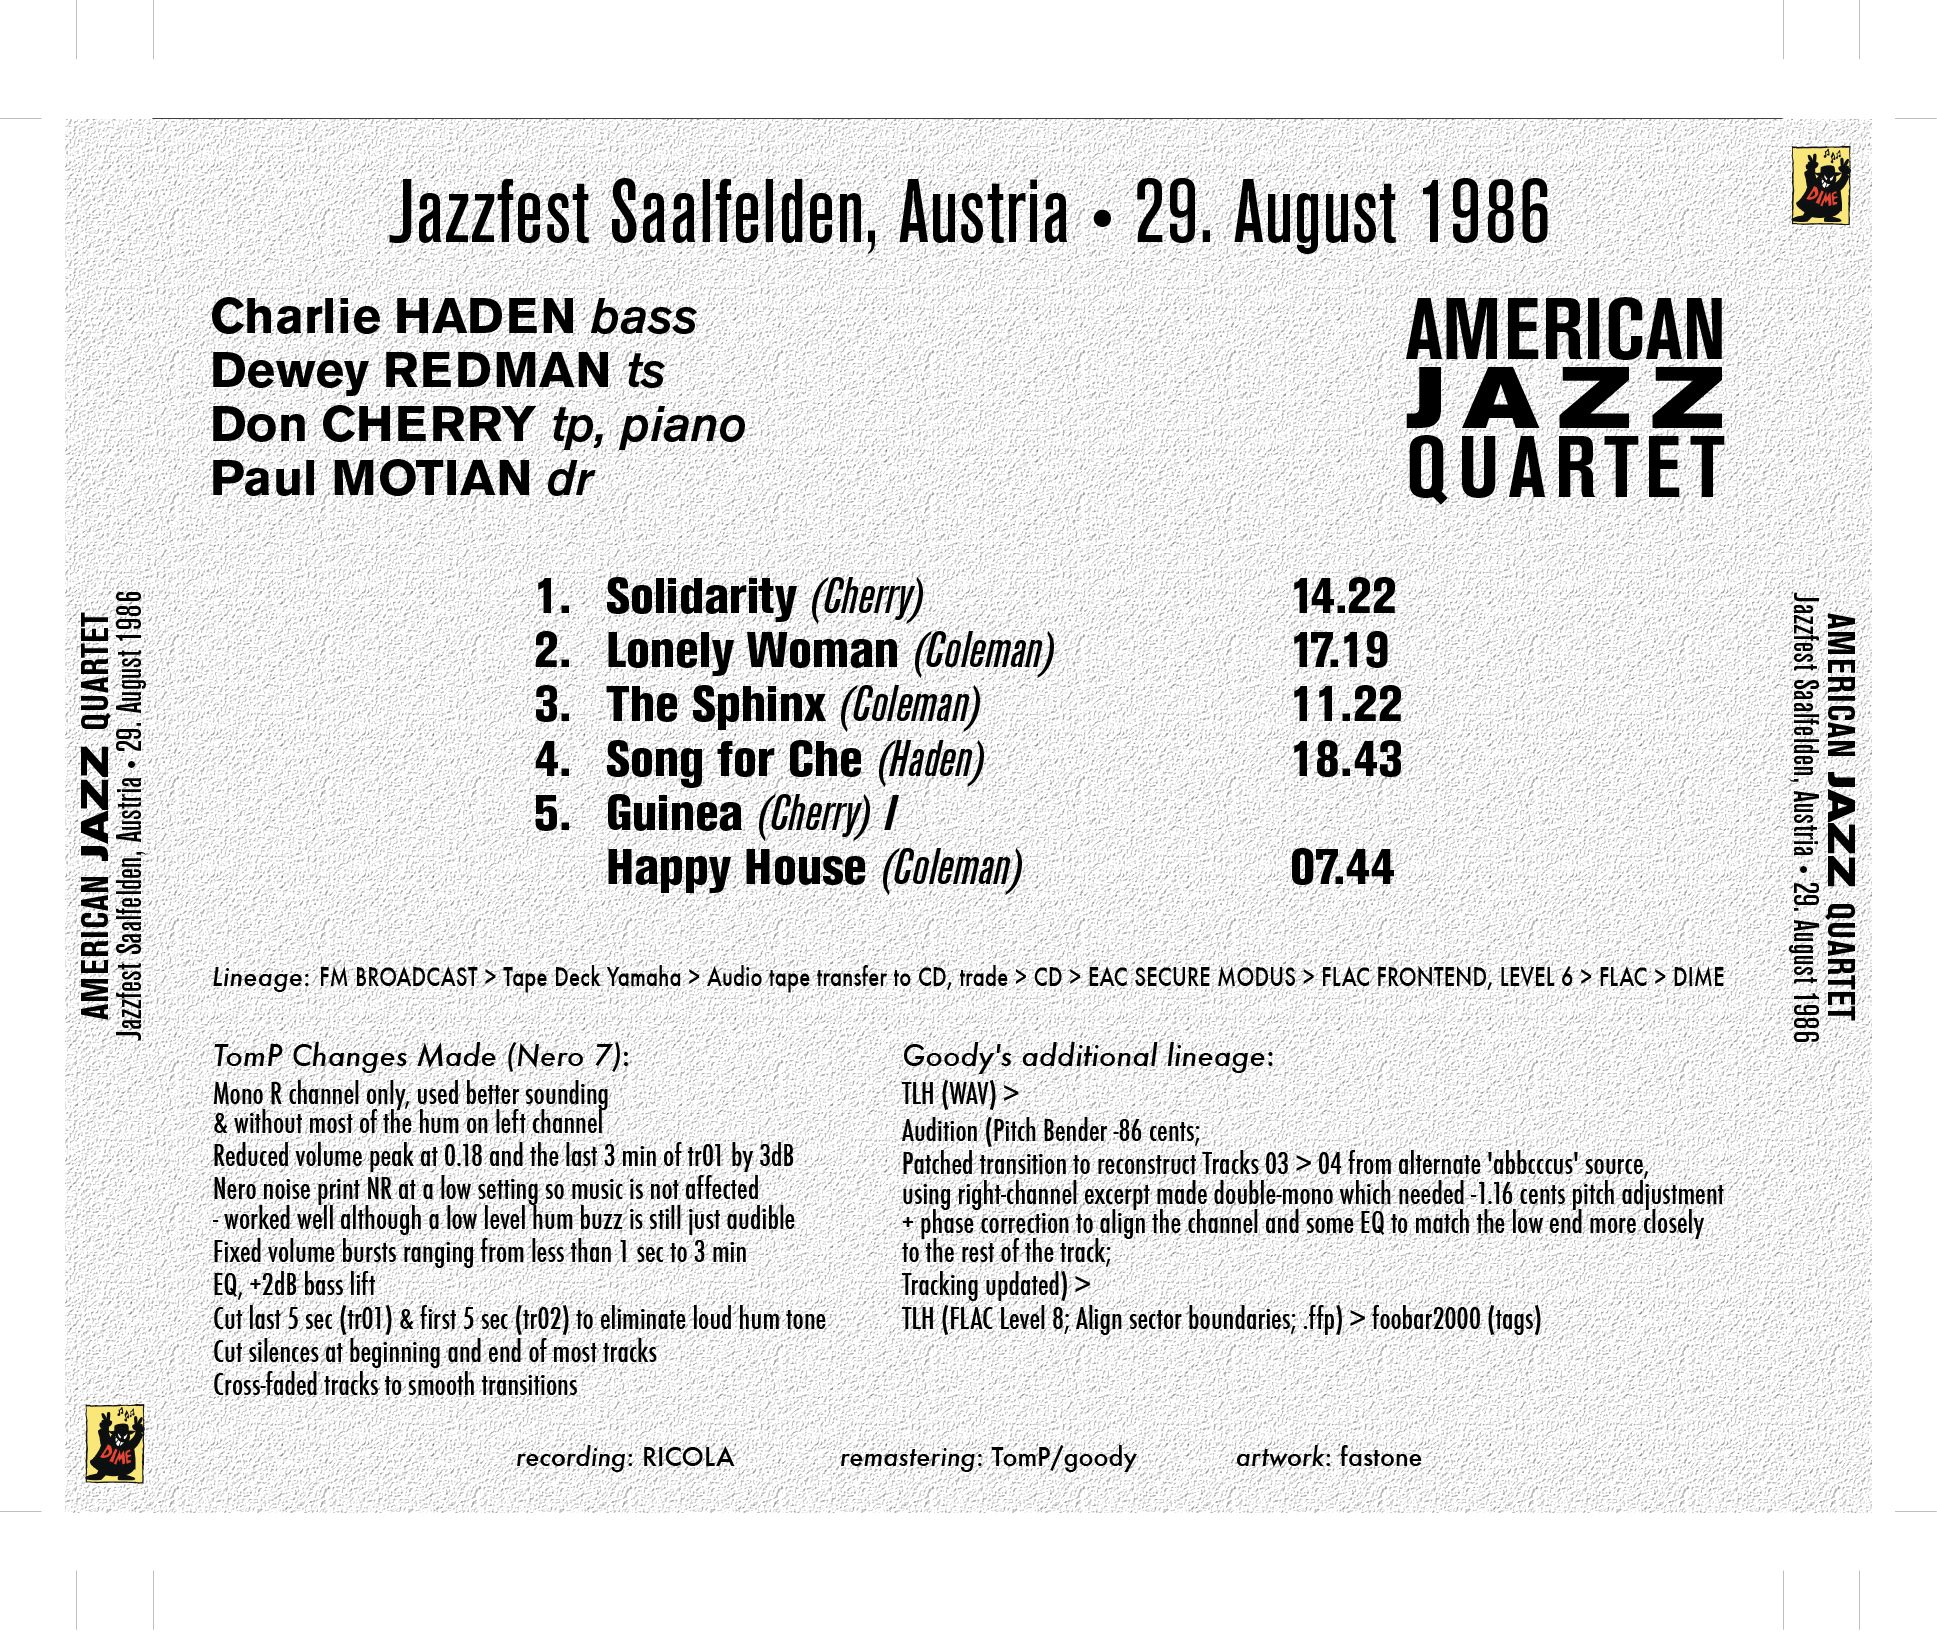 AmericanJazzQuartet1986-08-29JazzfestSaalfeldenAustria (2).jpg